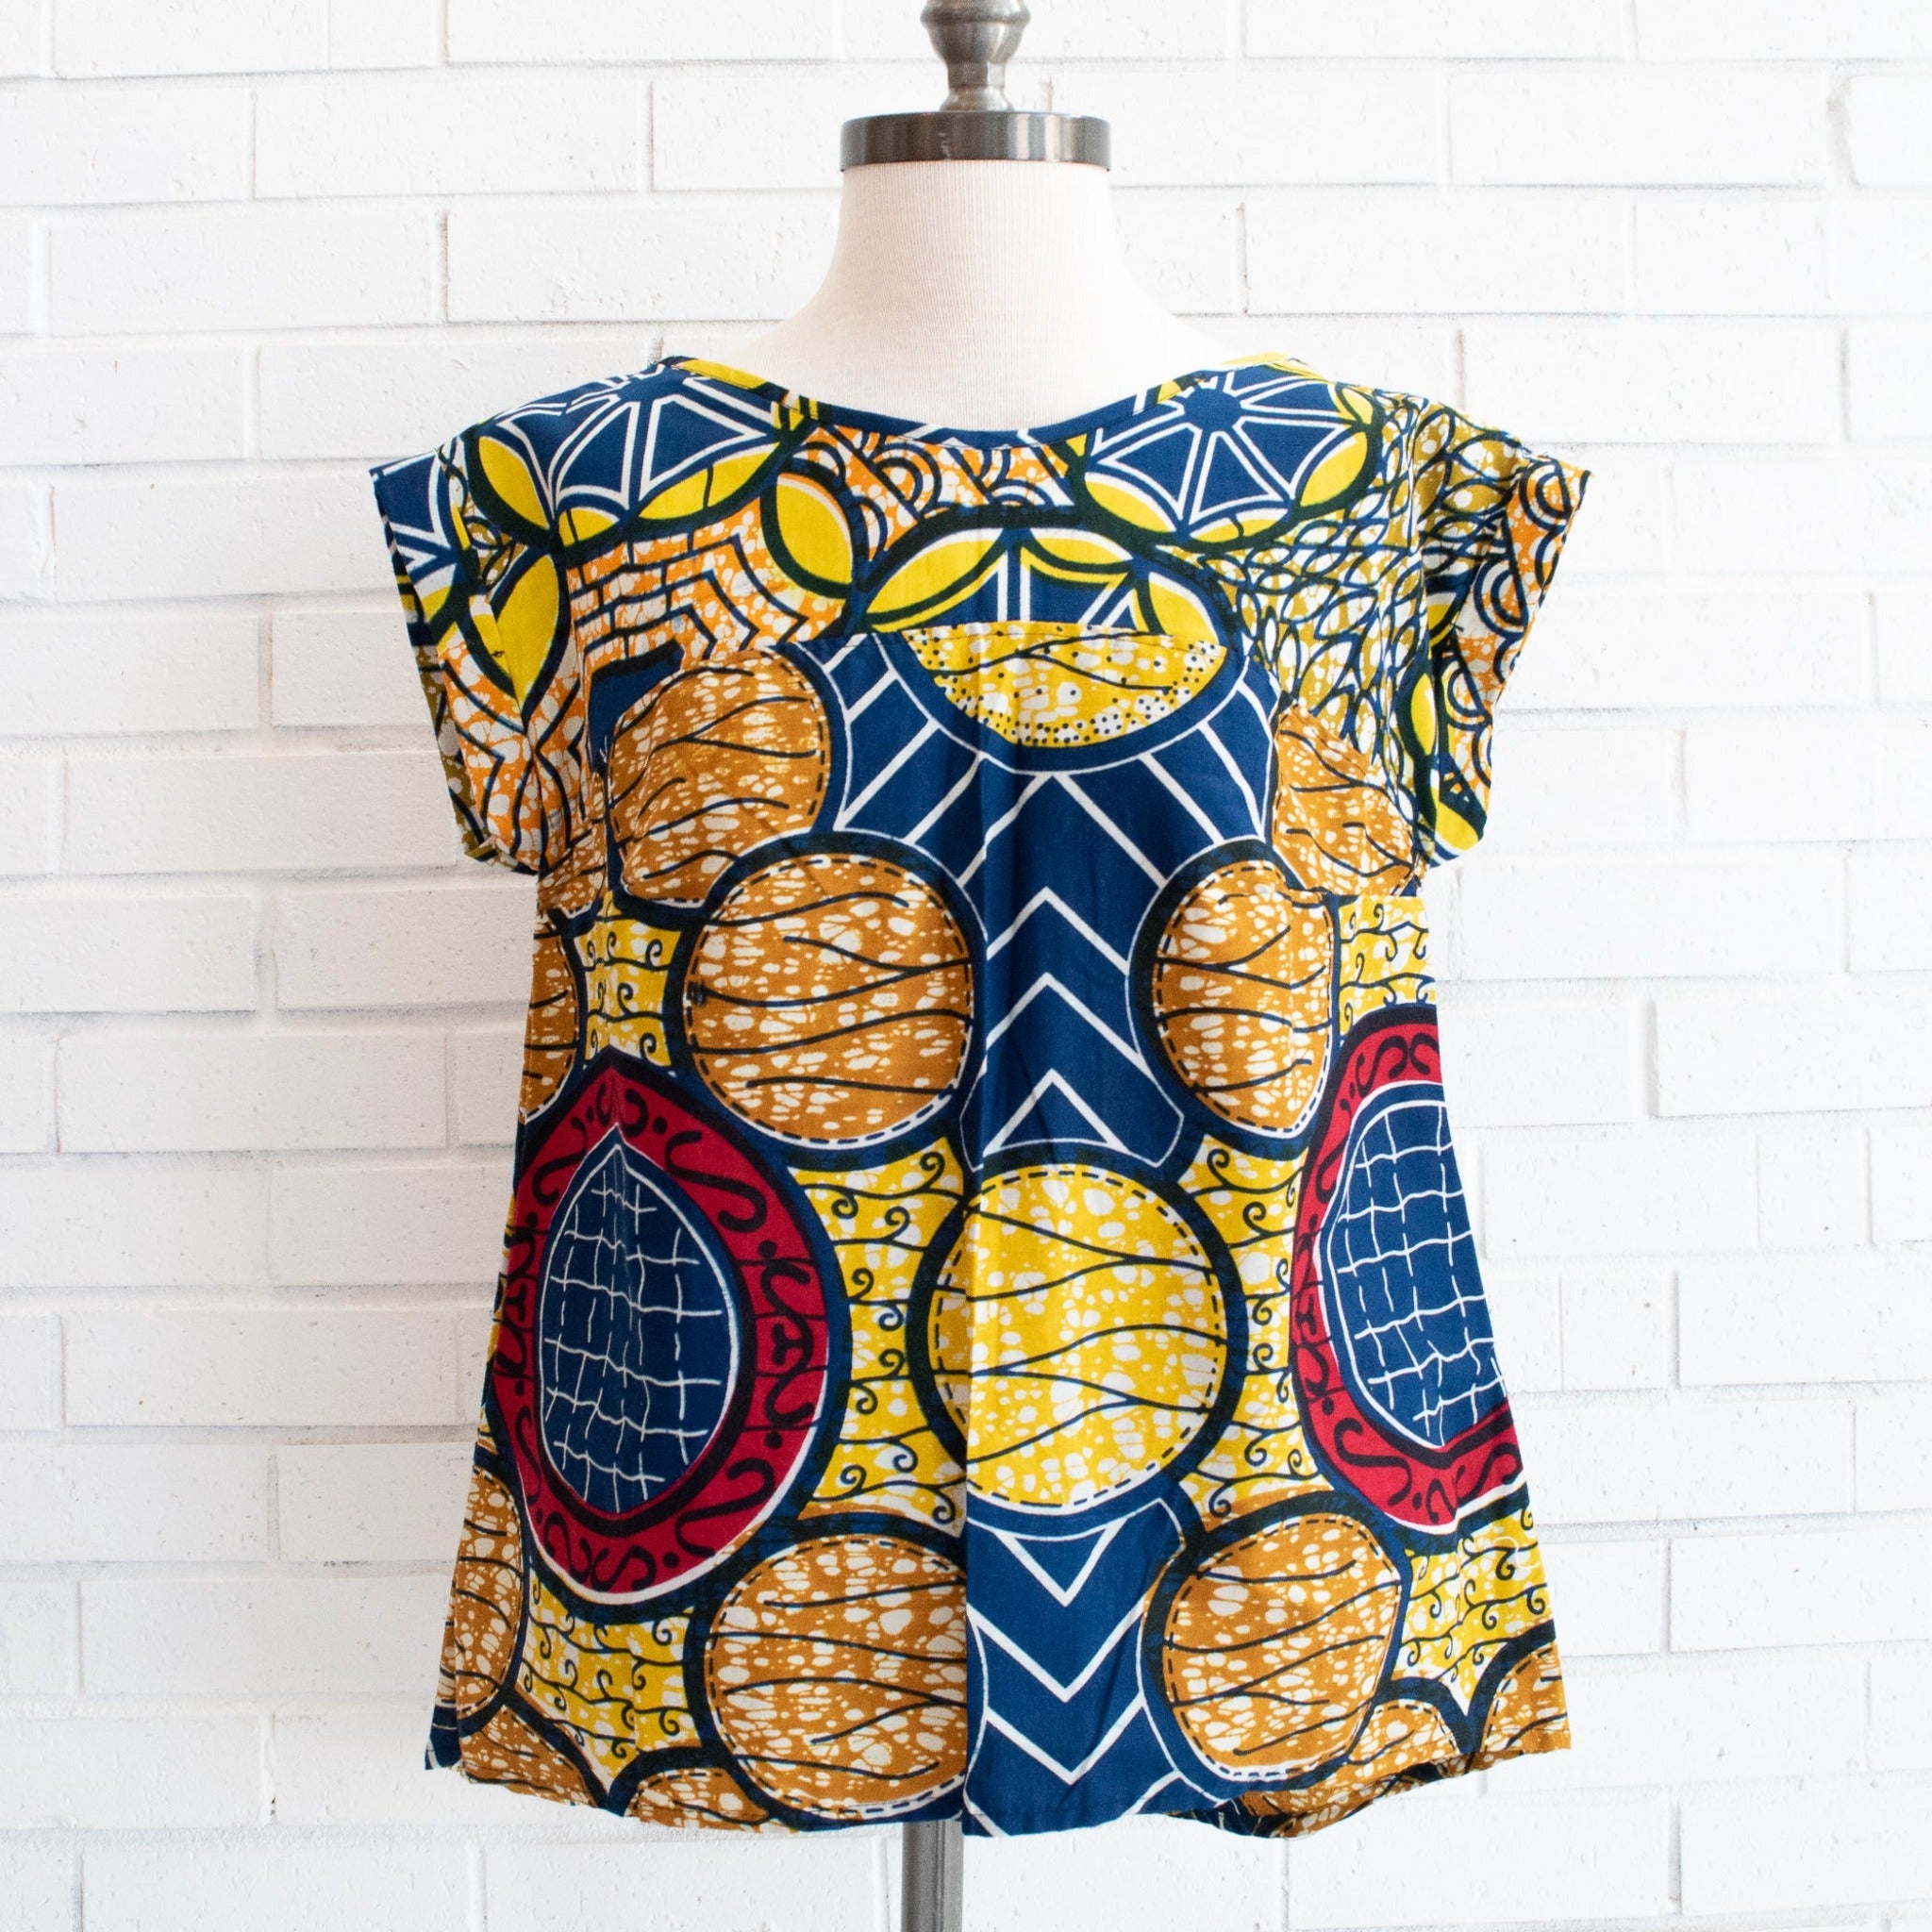 Orbit Sun Top - Kenyan materials and design for a fair trade boutique